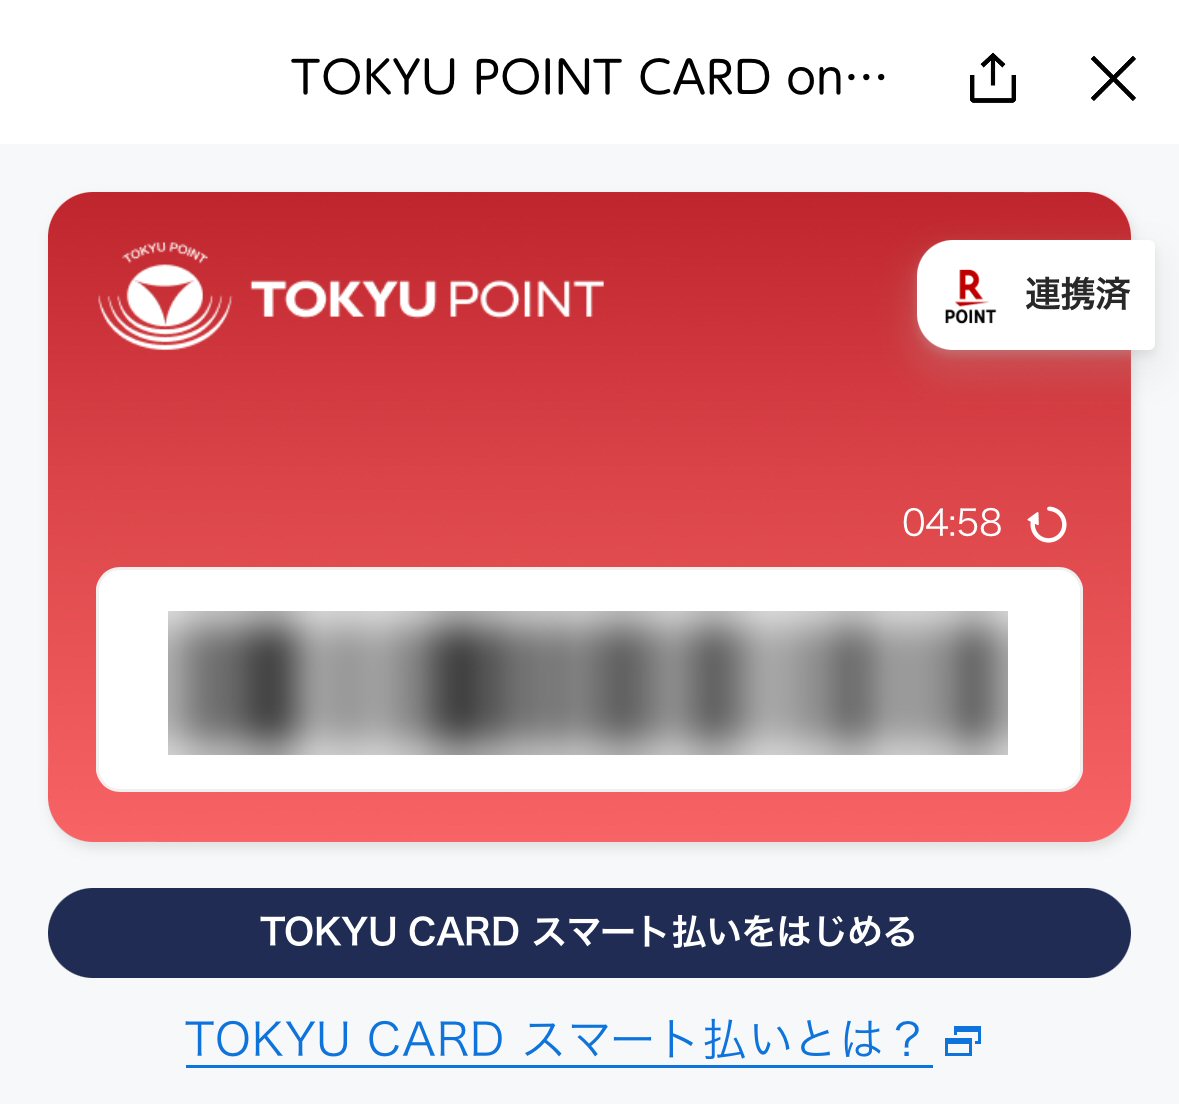 「TOKYU CARDスマート払いをはじめる」のボタン